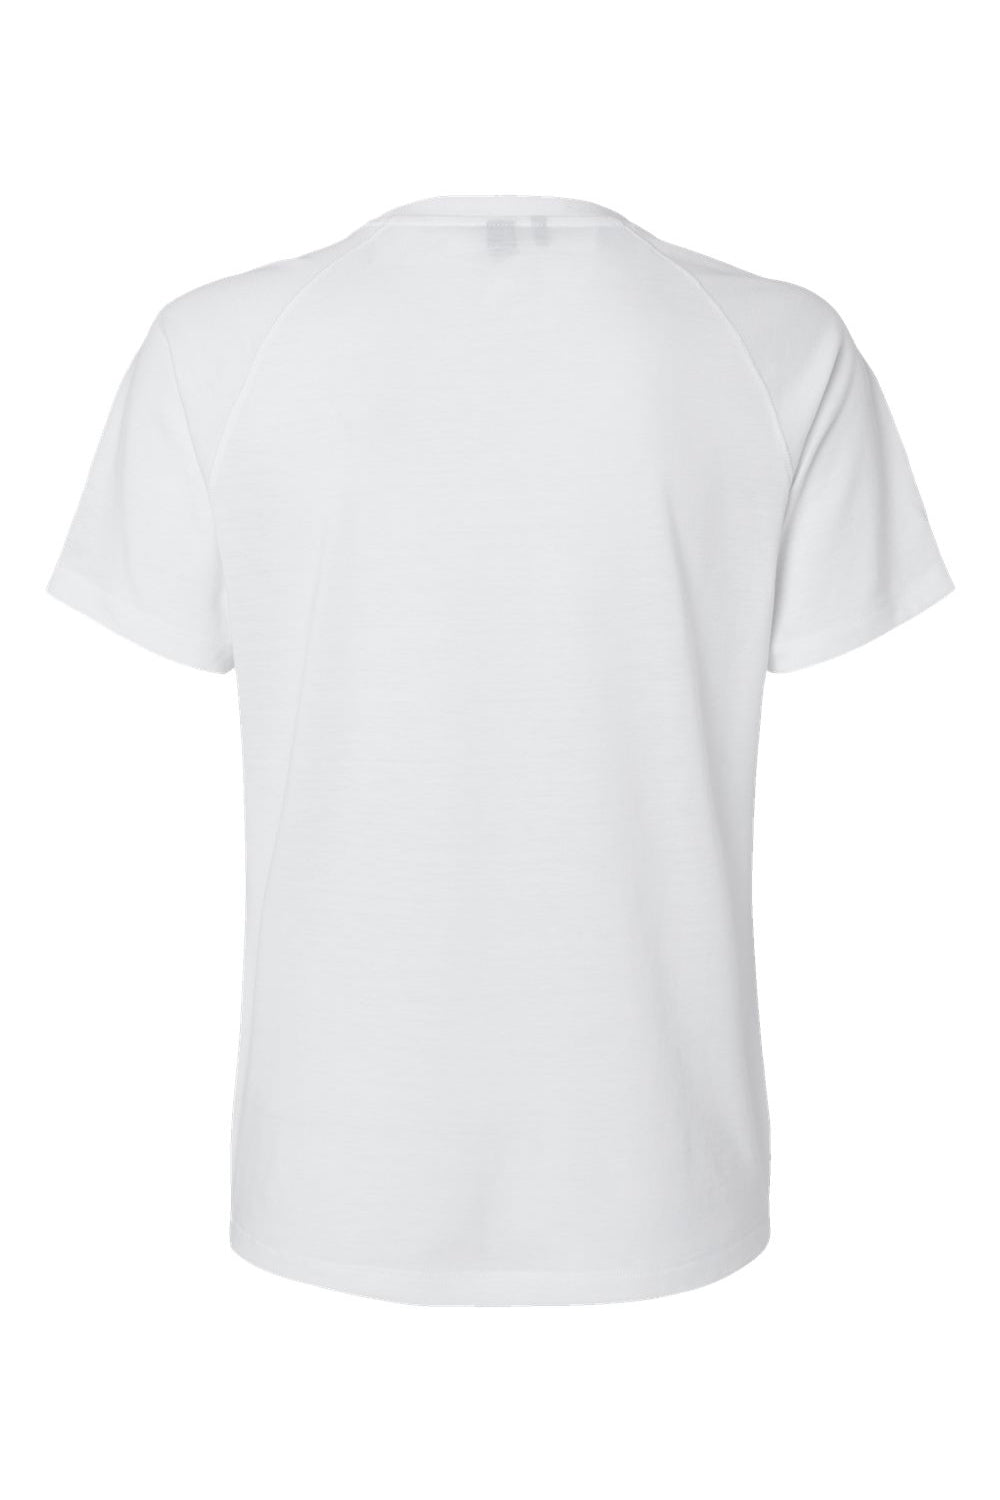 Adidas A557 Womens Short Sleeve Crewneck T-Shirt White Flat Back